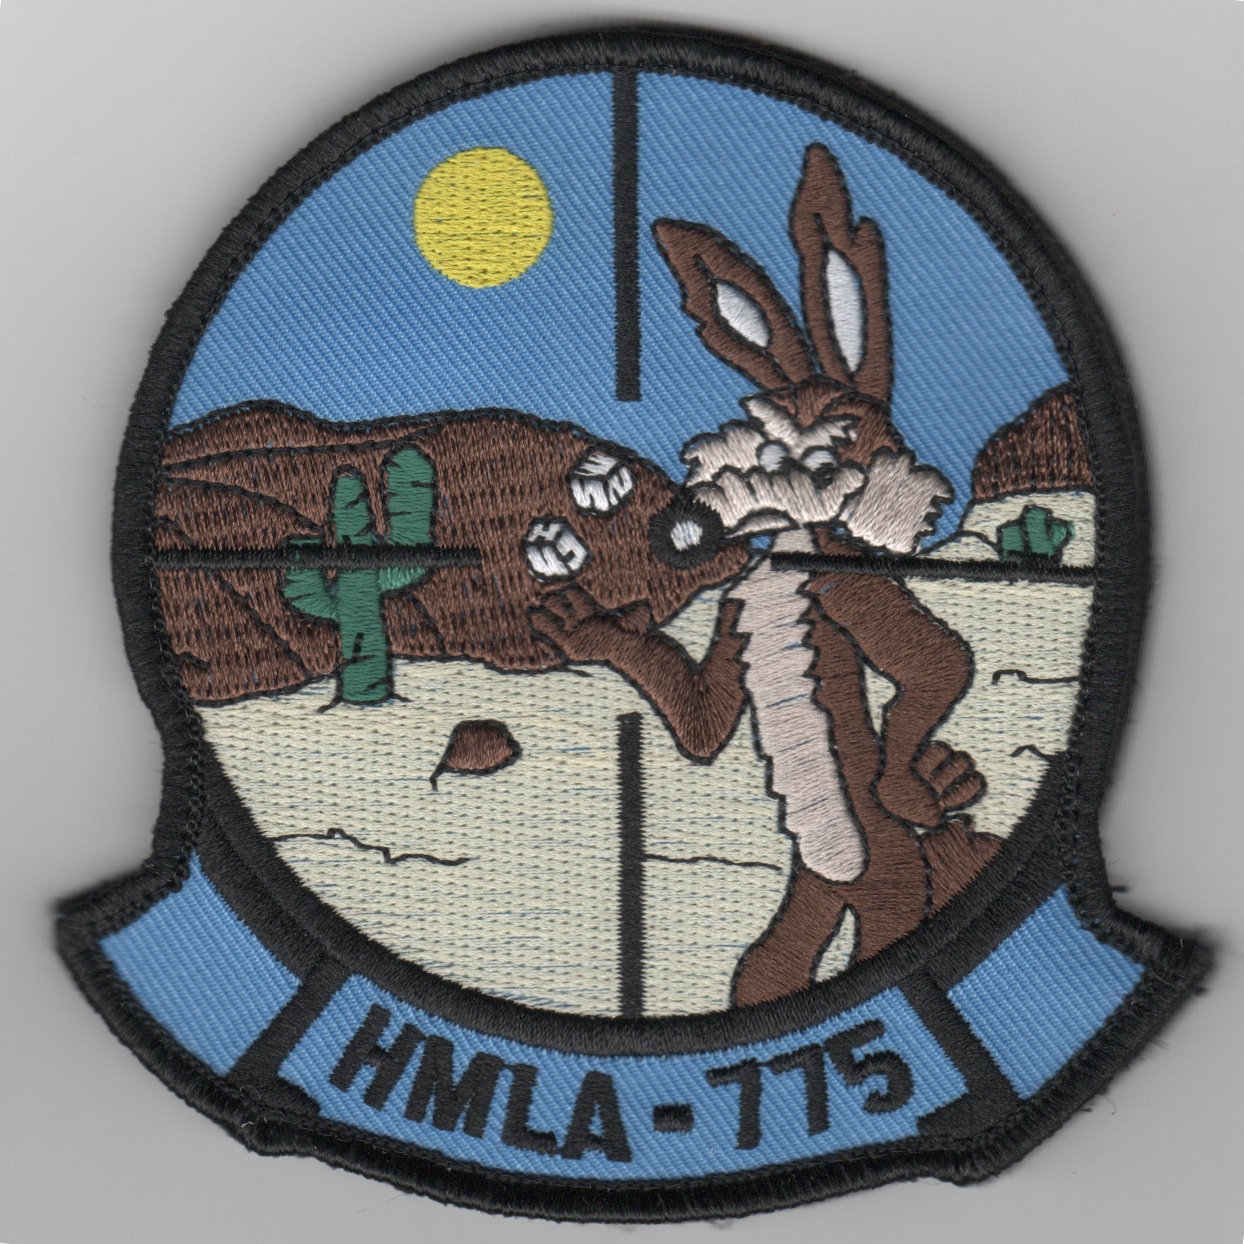 HMLA-775 Squadron Patch (Blue/SMALL)